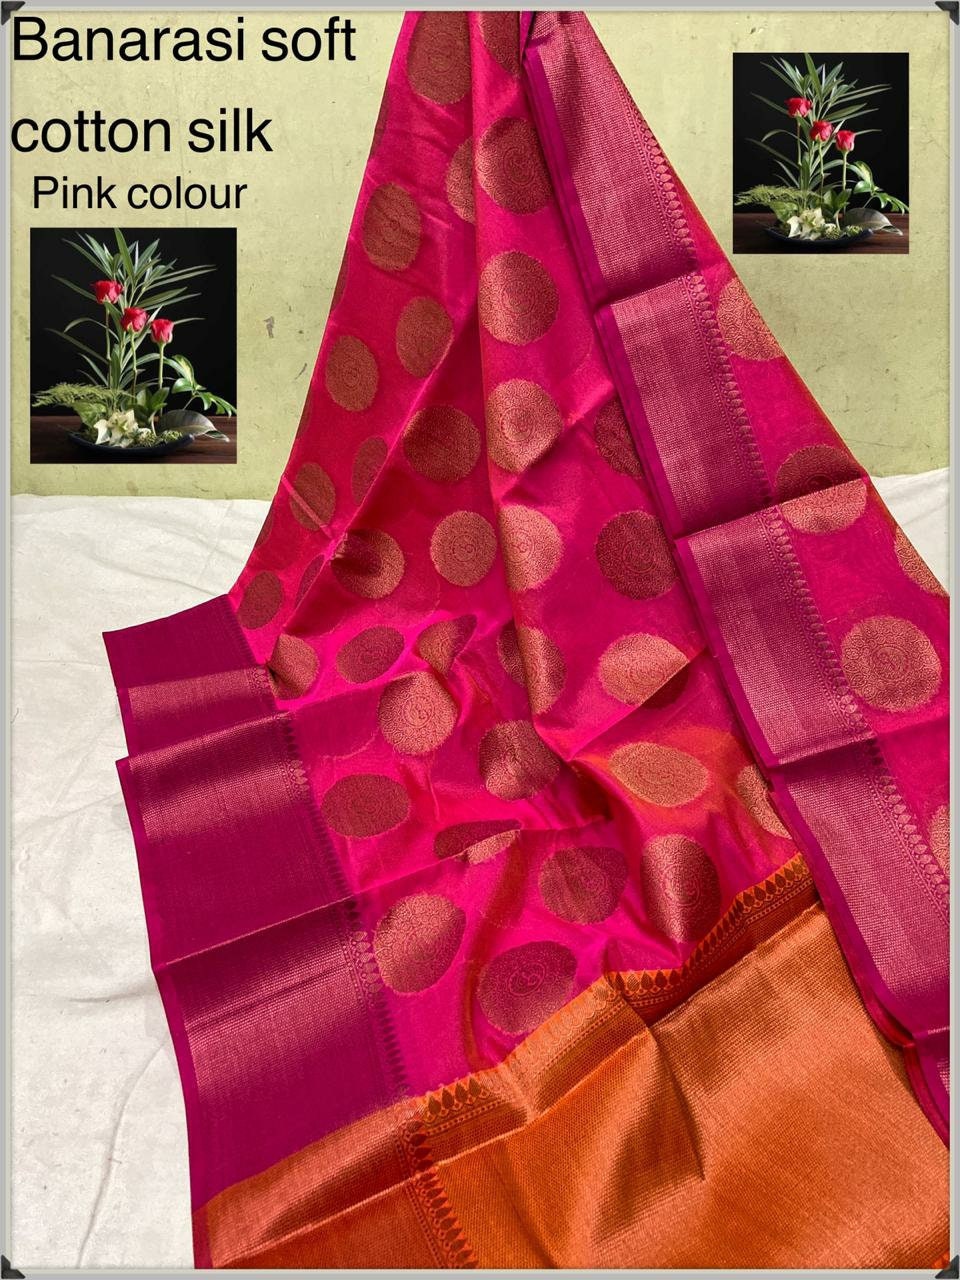 Details more than 199 kora cotton sarees super hot